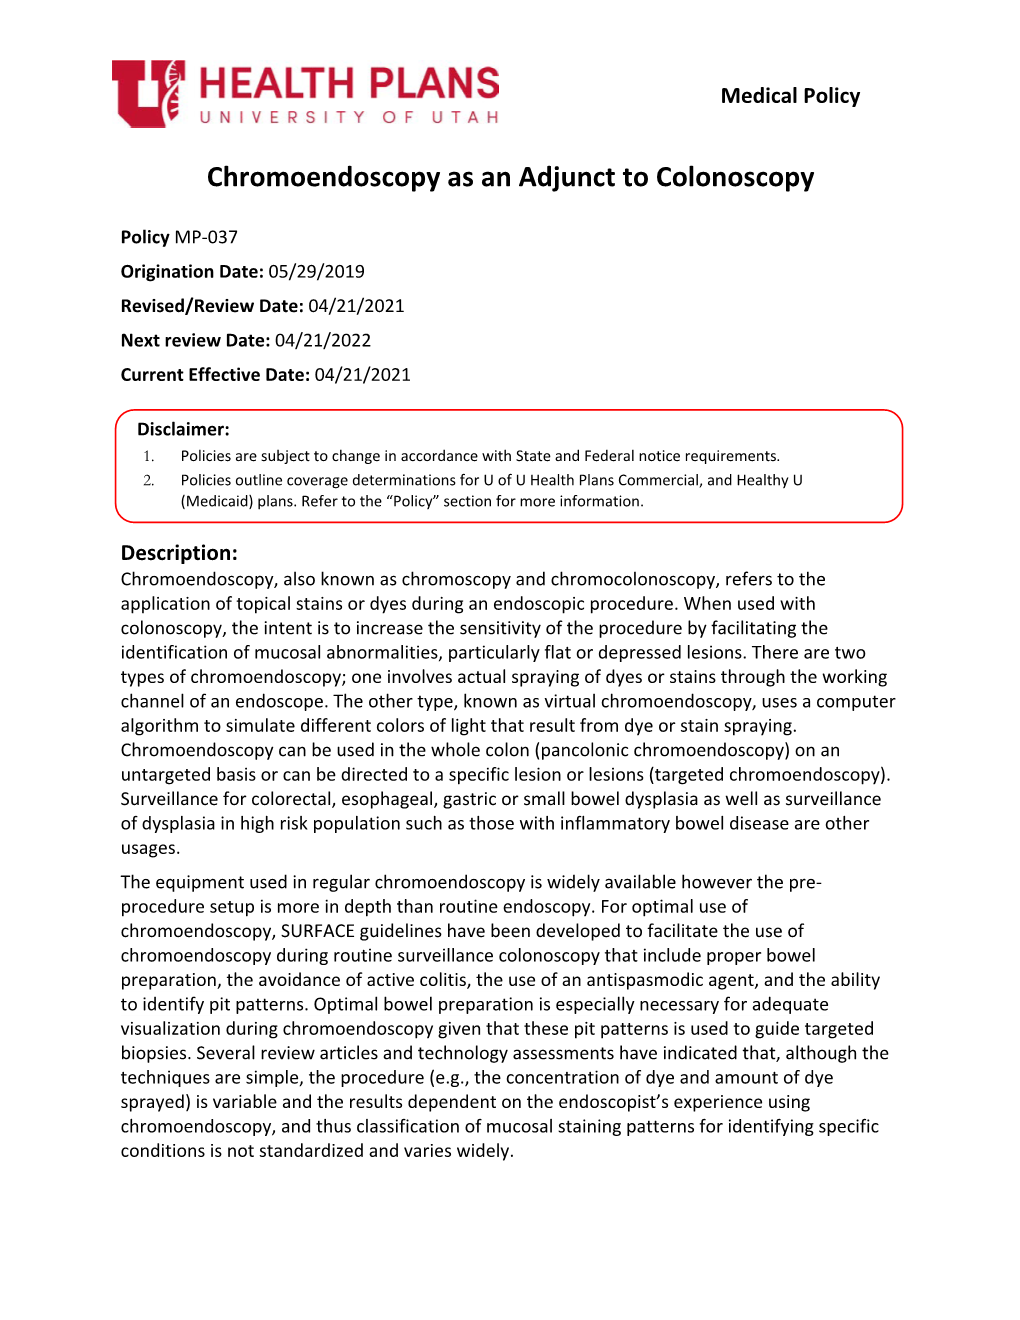 Chromoendoscopy As an Adjunct to Colonoscopy